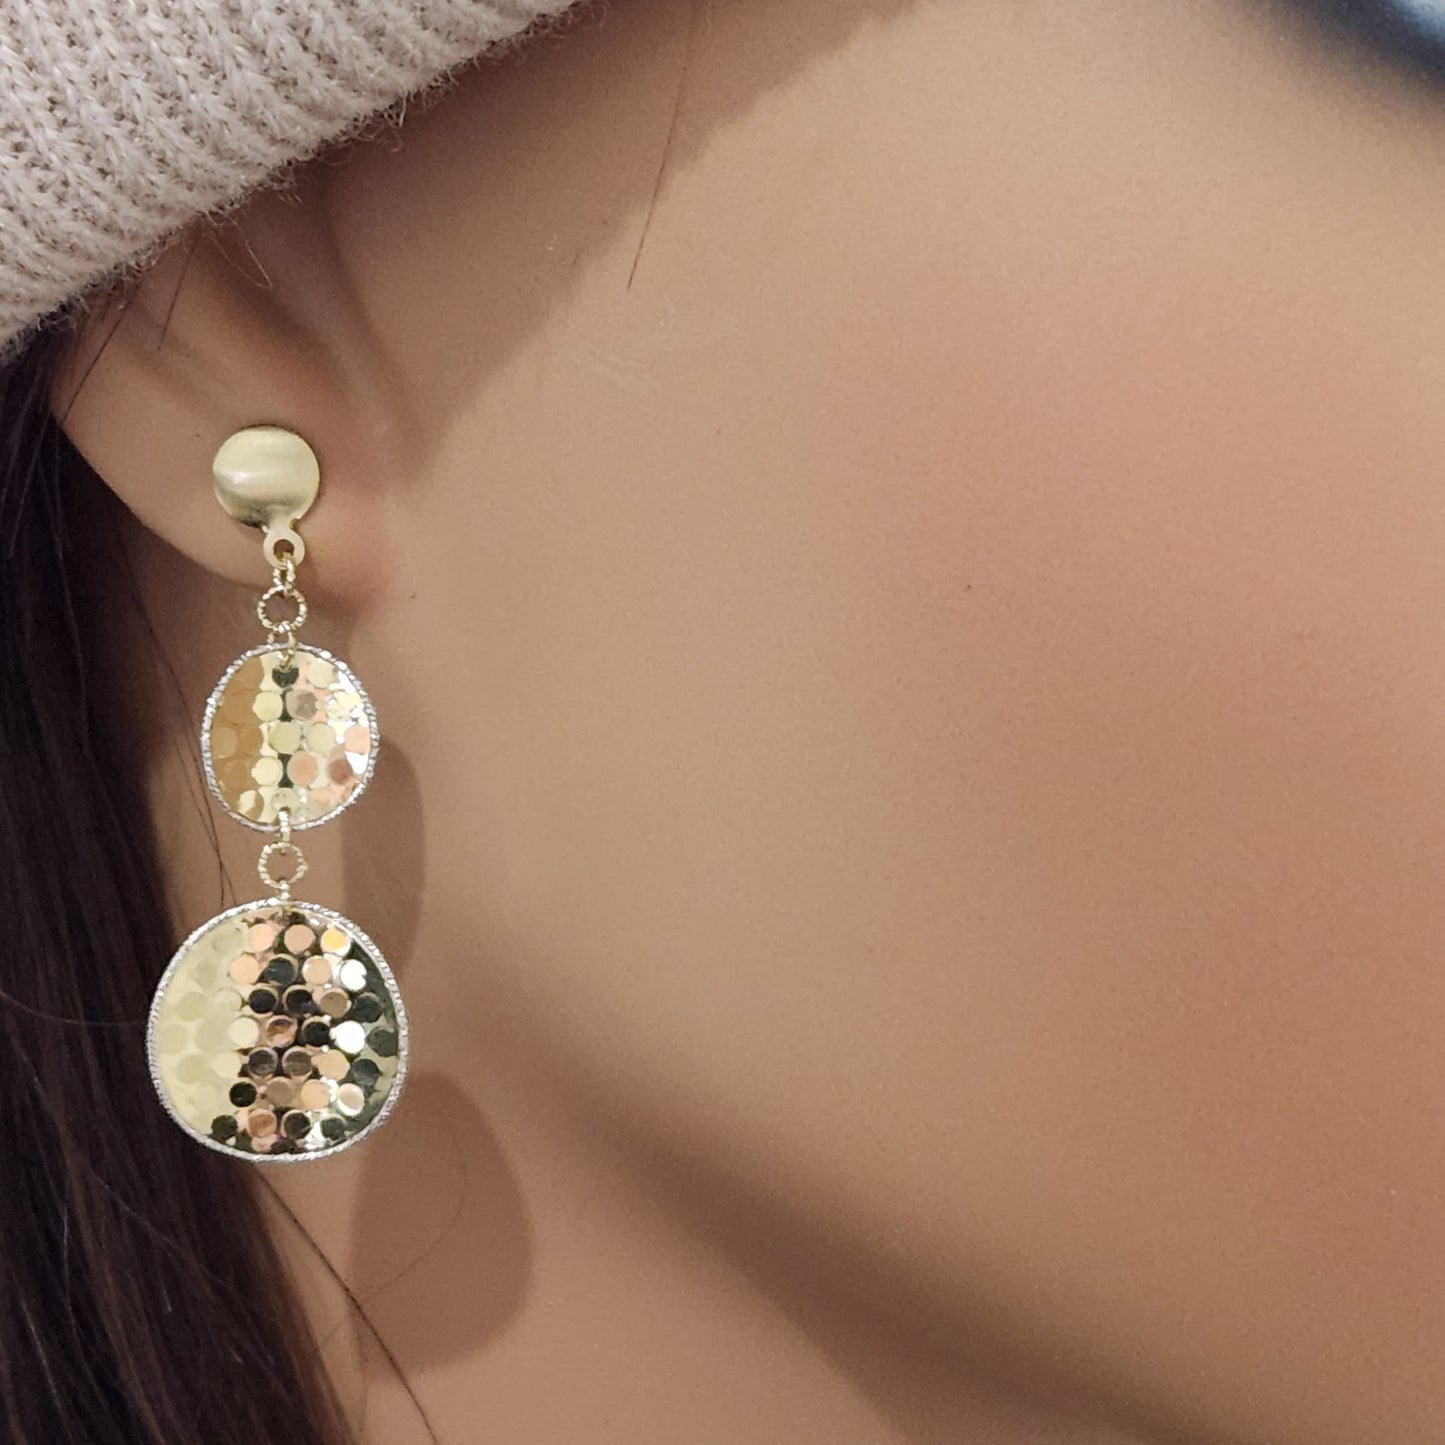 14K Gold Double Circle Diamond Cut Earrings